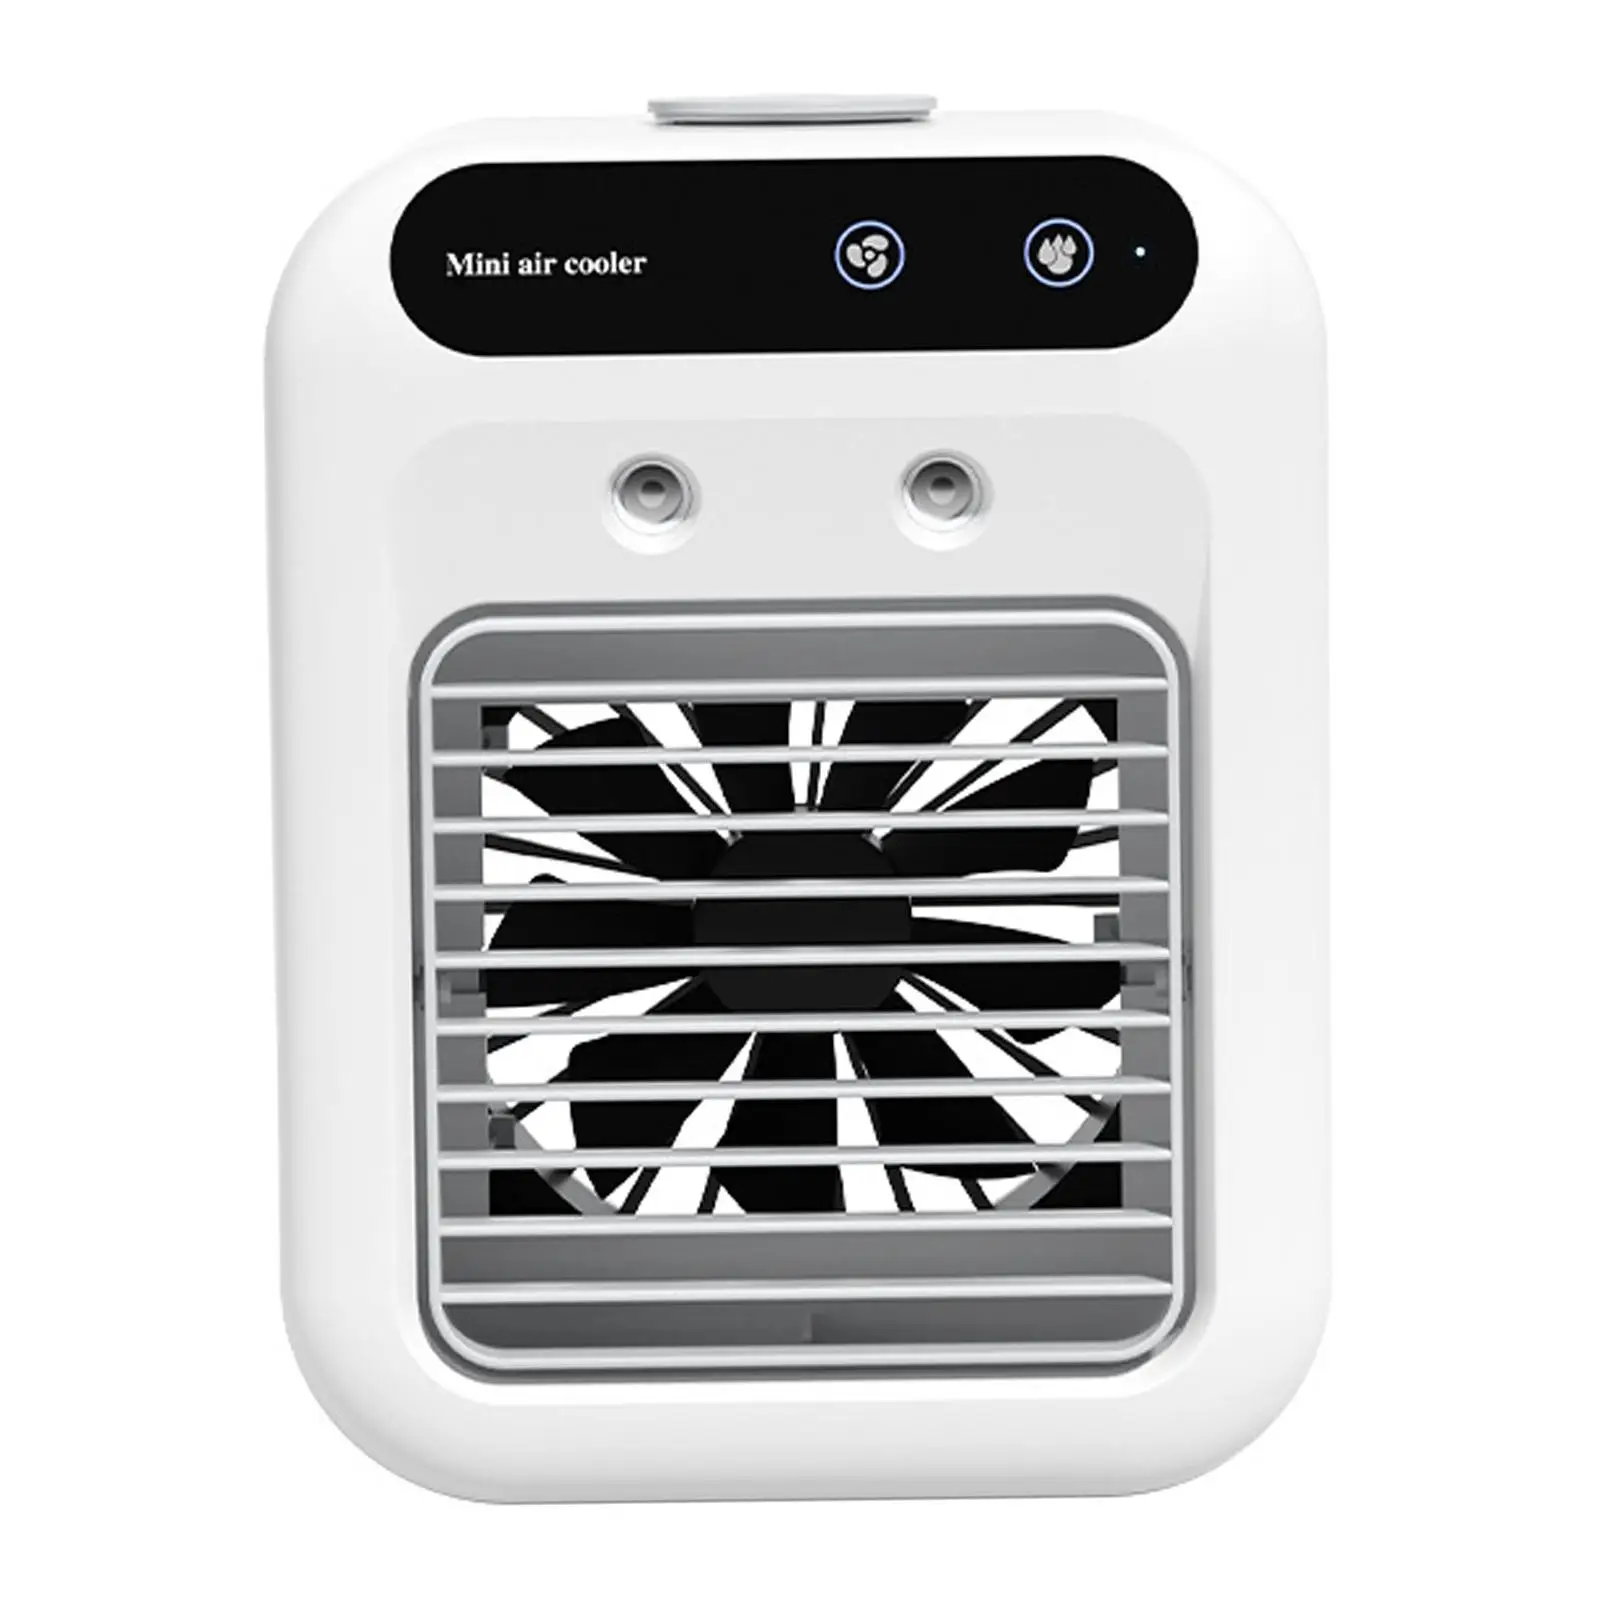 Portable Air Conditioner Small Quiet 500ml Water Tank Personal Evaporative Air Cooler Fan for Bedroom Camping Car Desktop Dorm